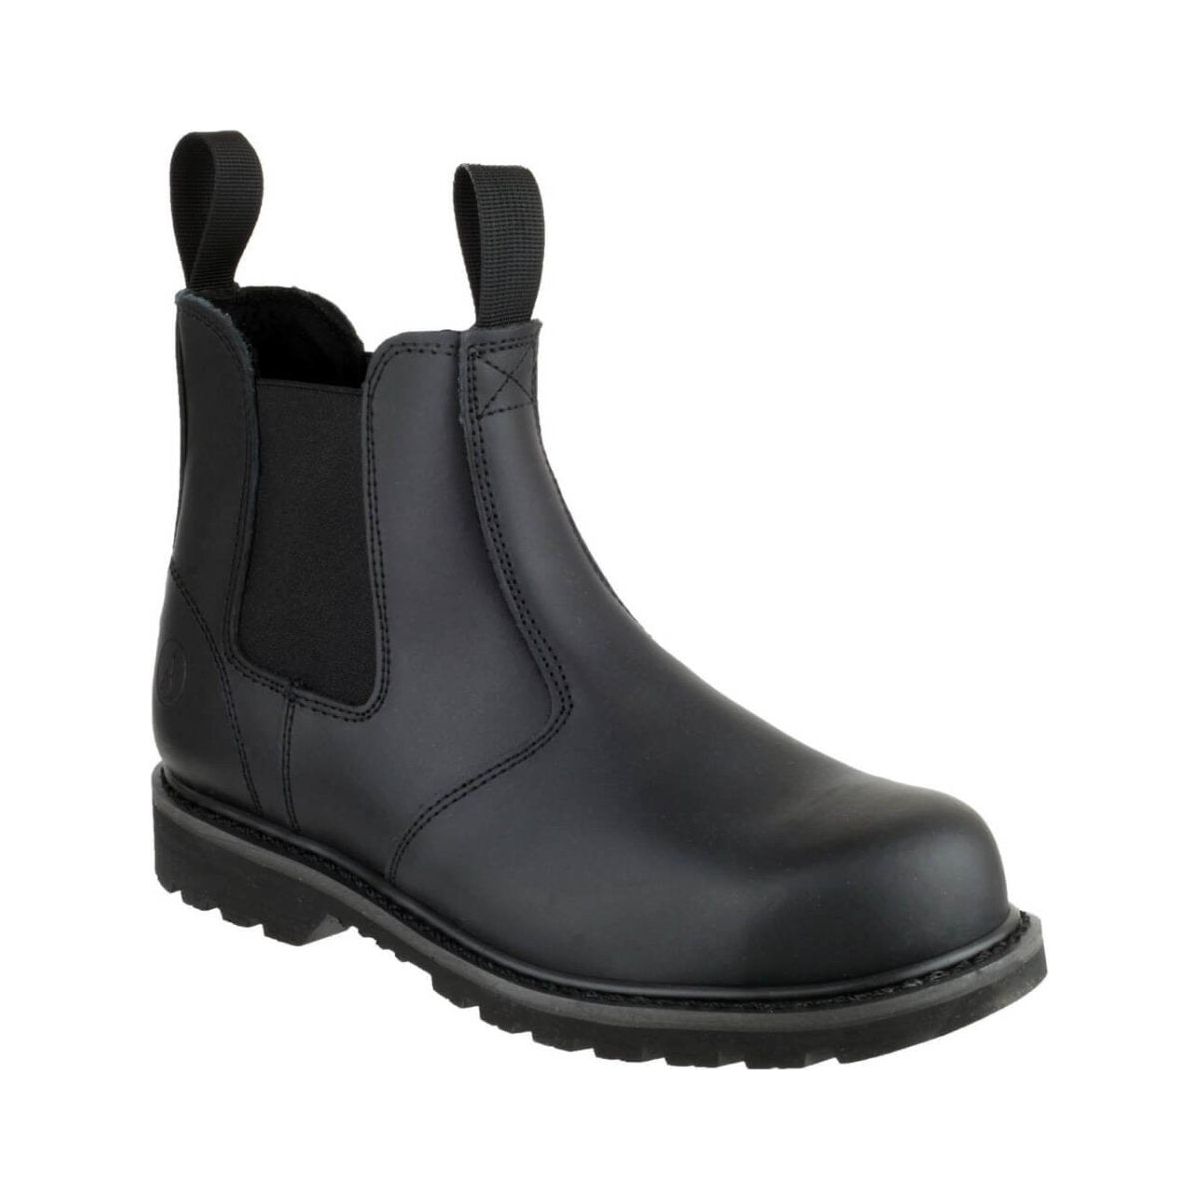 Amblers Fs5 Welted Safety Dealer Boots Mens - workweargurus.com